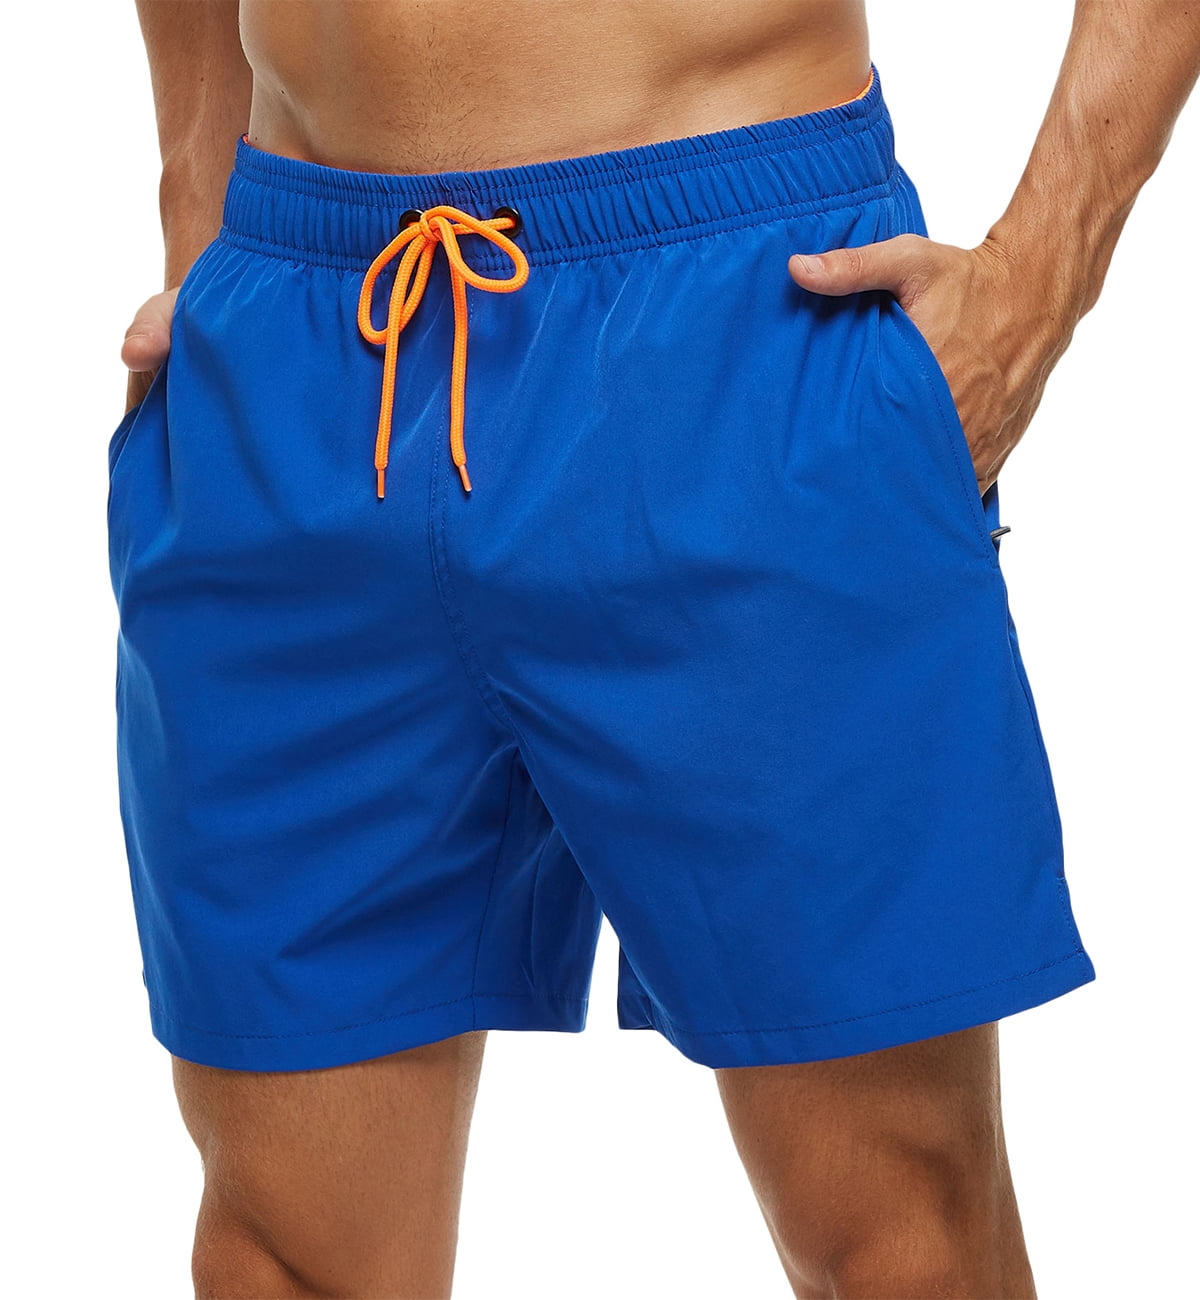 Tyhengta Men's Swim Trunks Quick Dry Beach Shorts with Zipper Pockets ...